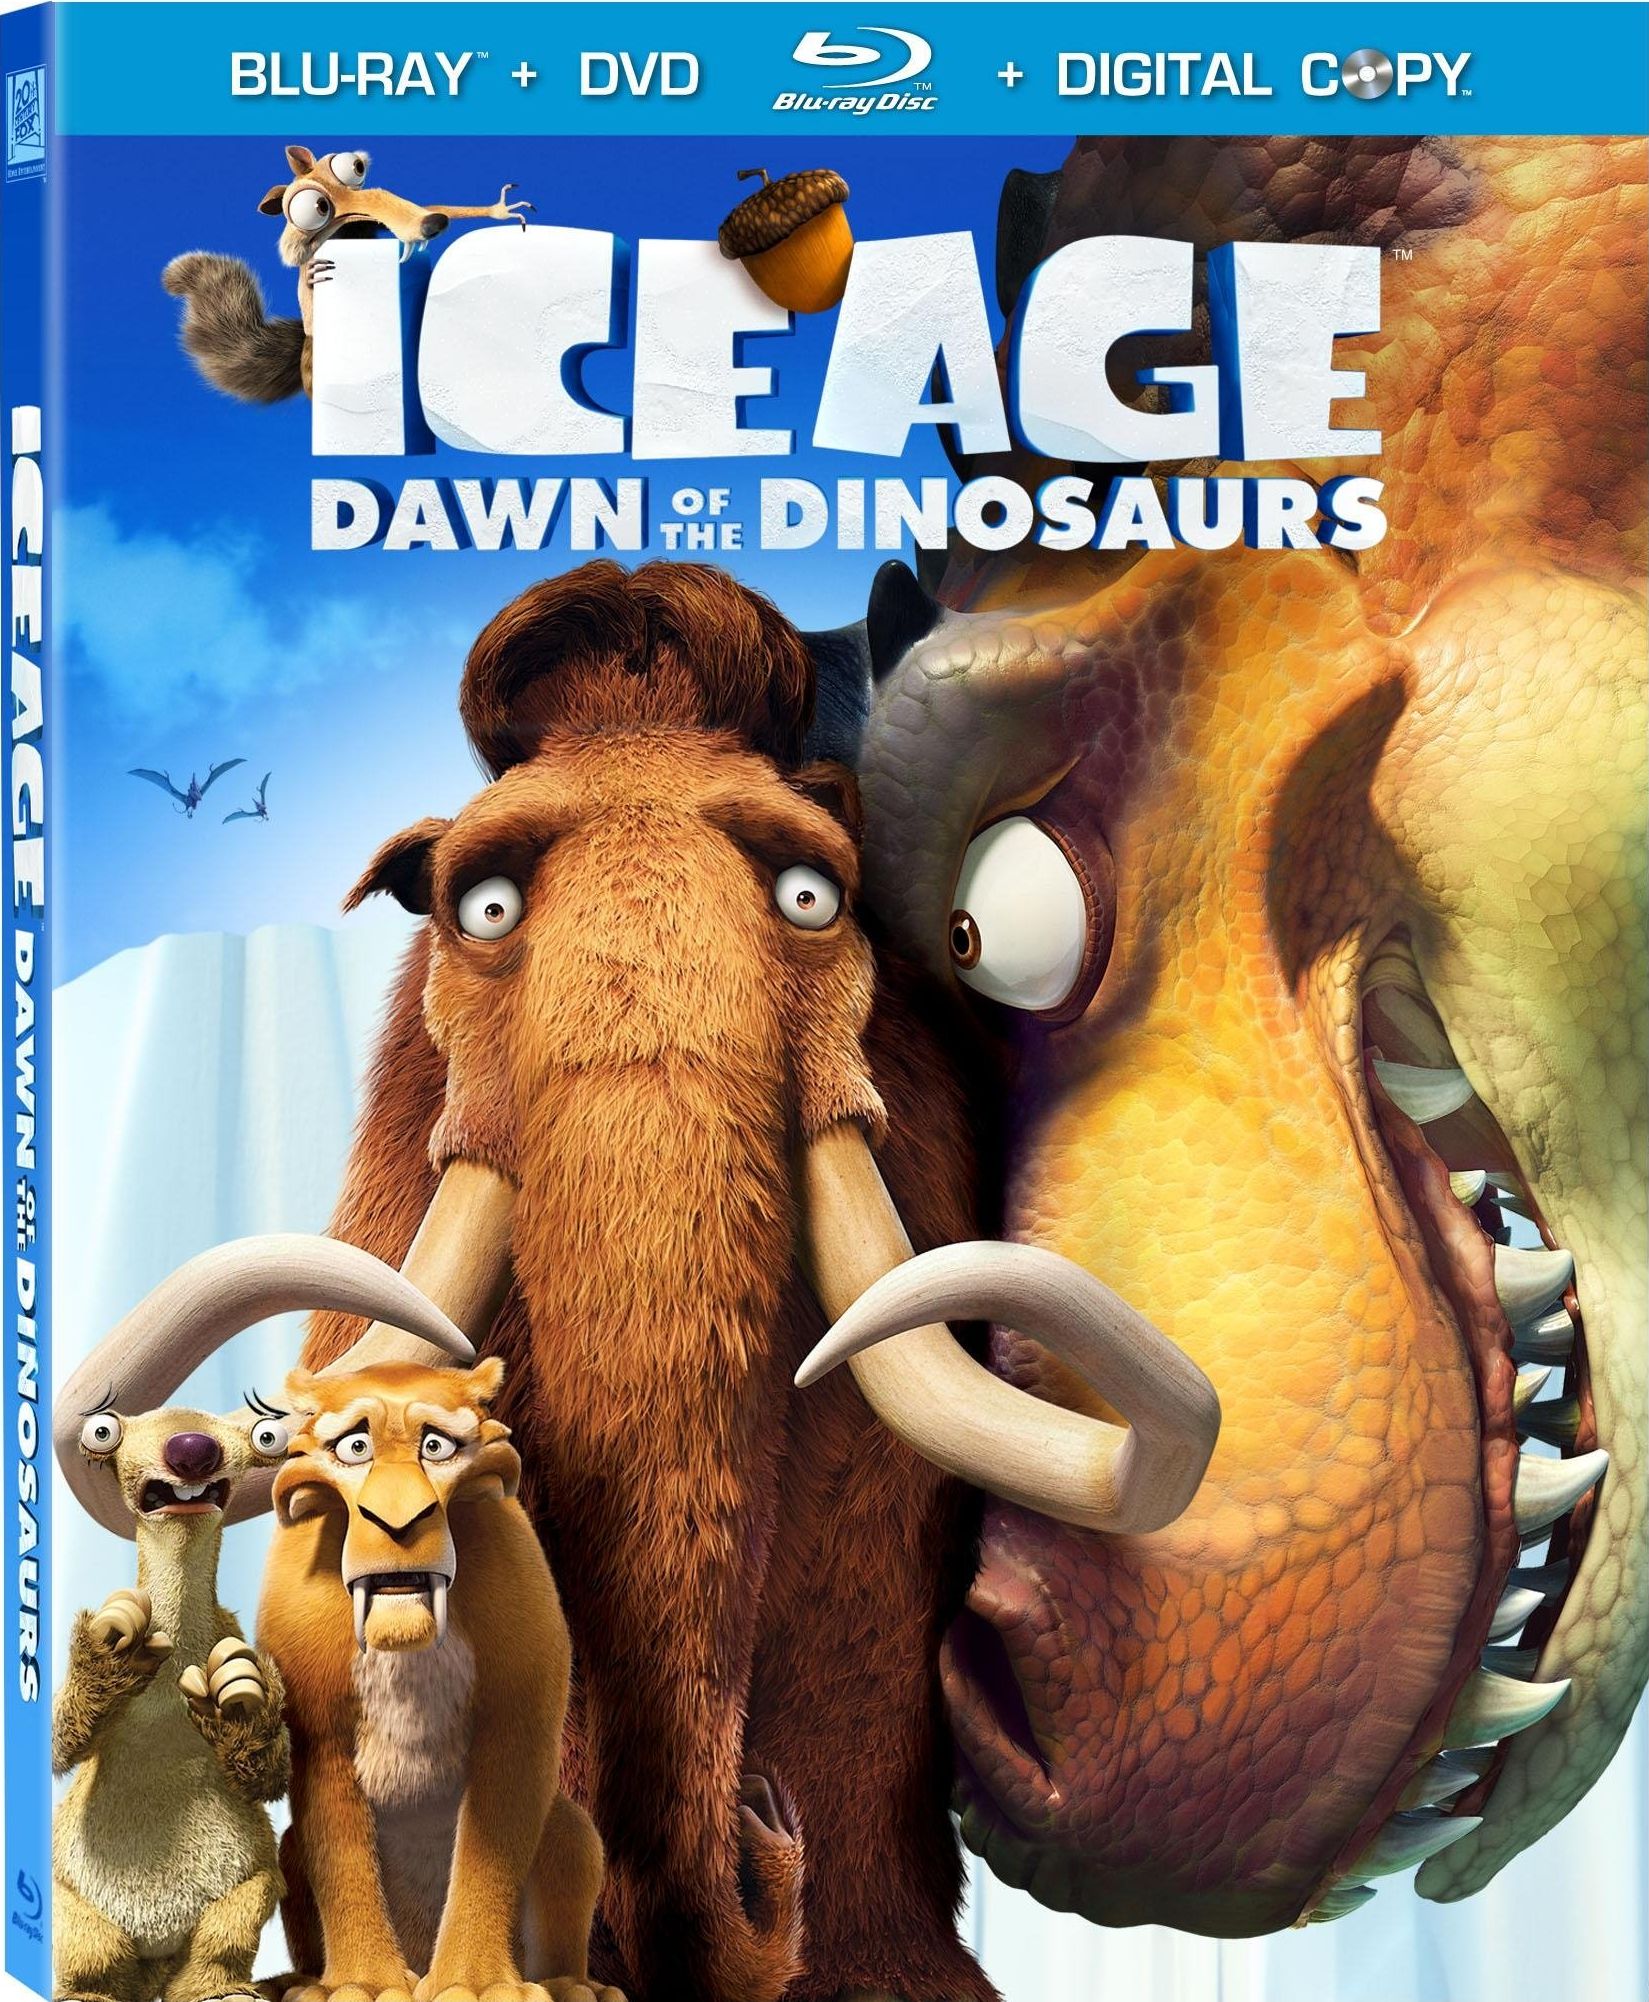 Amazoncom: Ice Age: Dawn of the Dinosaurs: Ray Romano